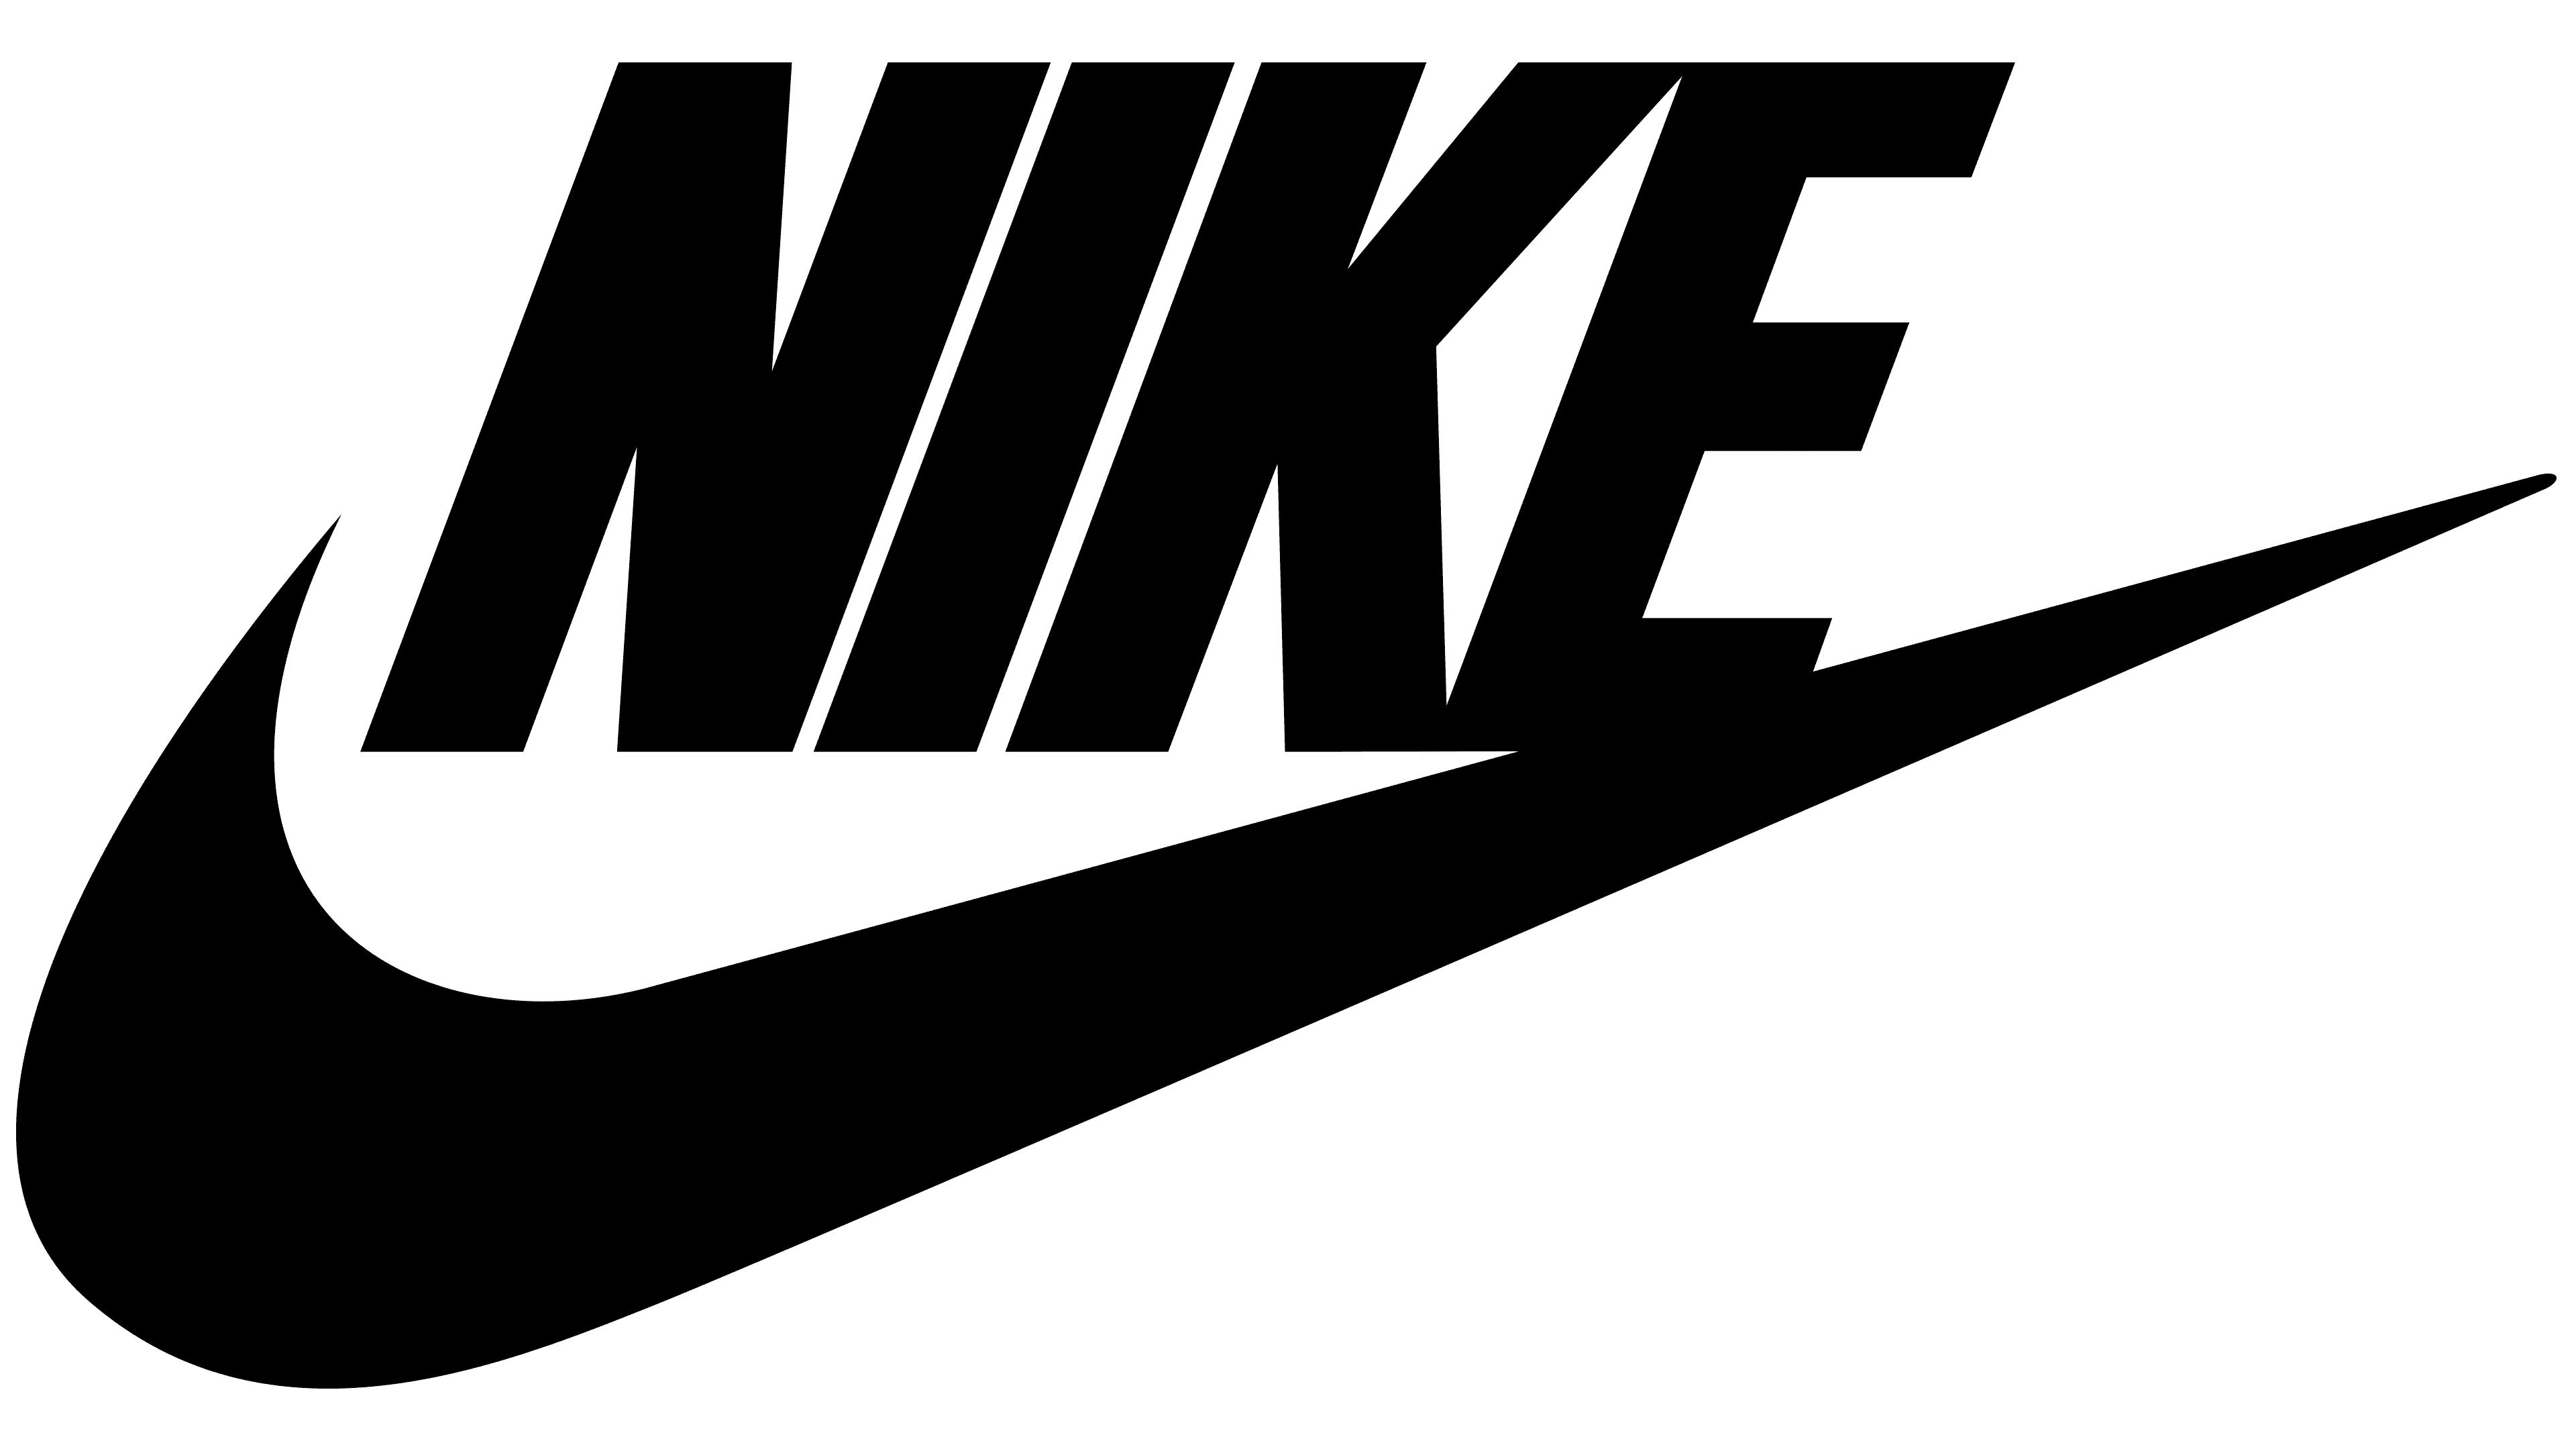 Maniobra Cuaderno Cien años Nike Logo, symbol, meaning, history, PNG, brand